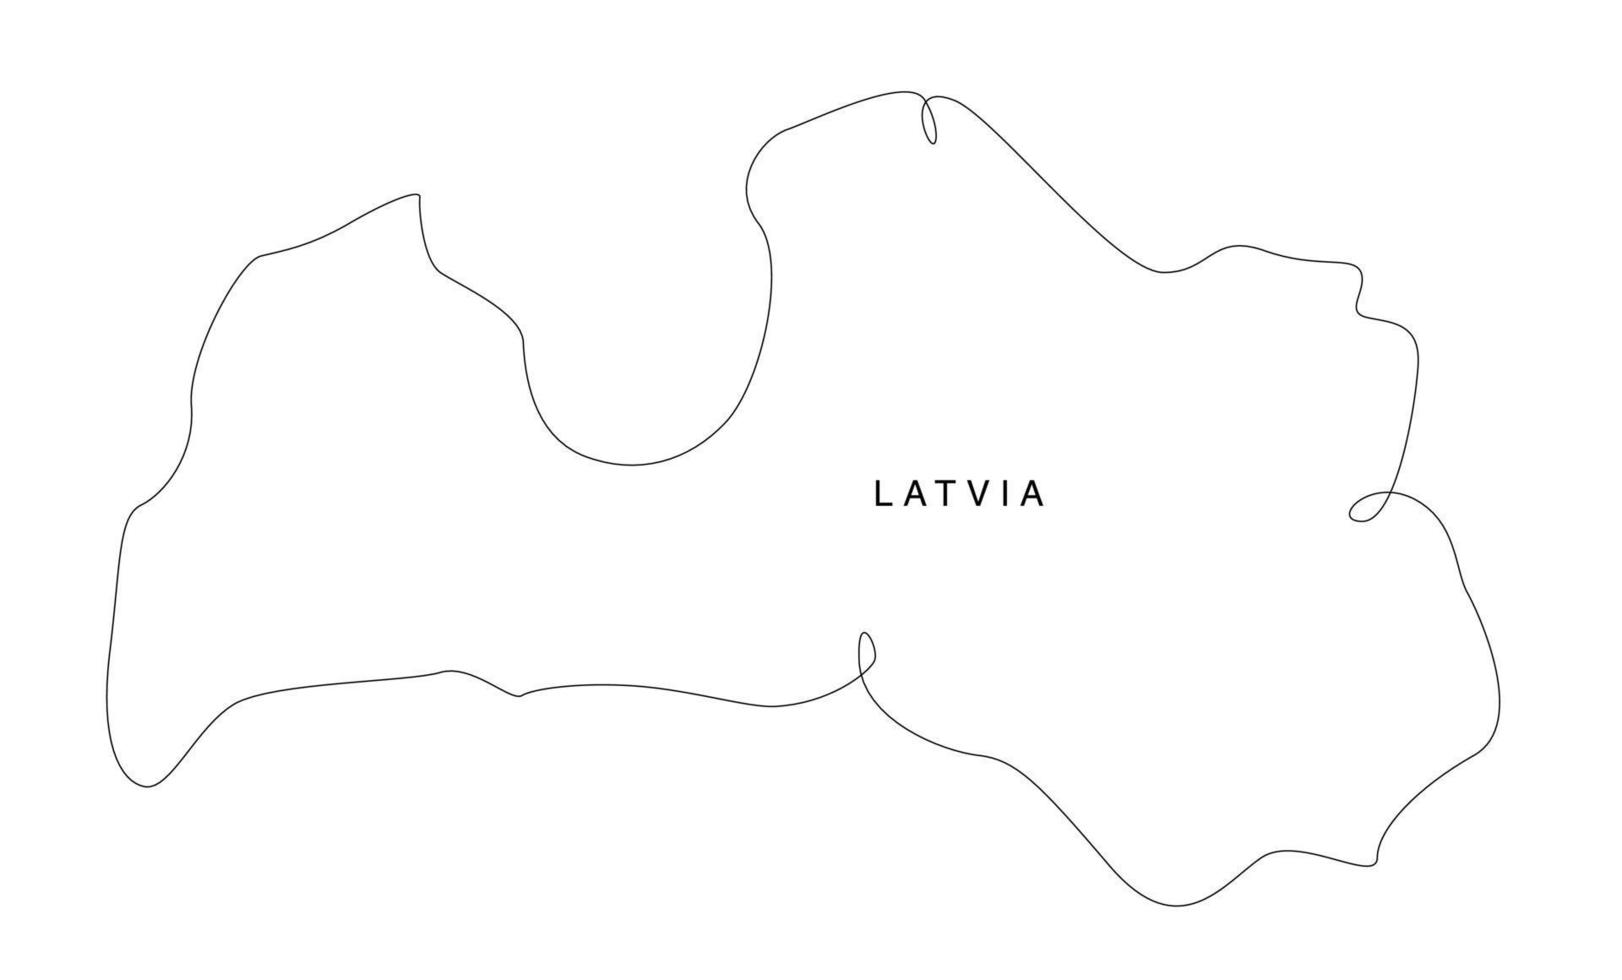 mapa de letonia de arte lineal. mapa de línea continua de europa. ilustración vectorial esquema único. vector